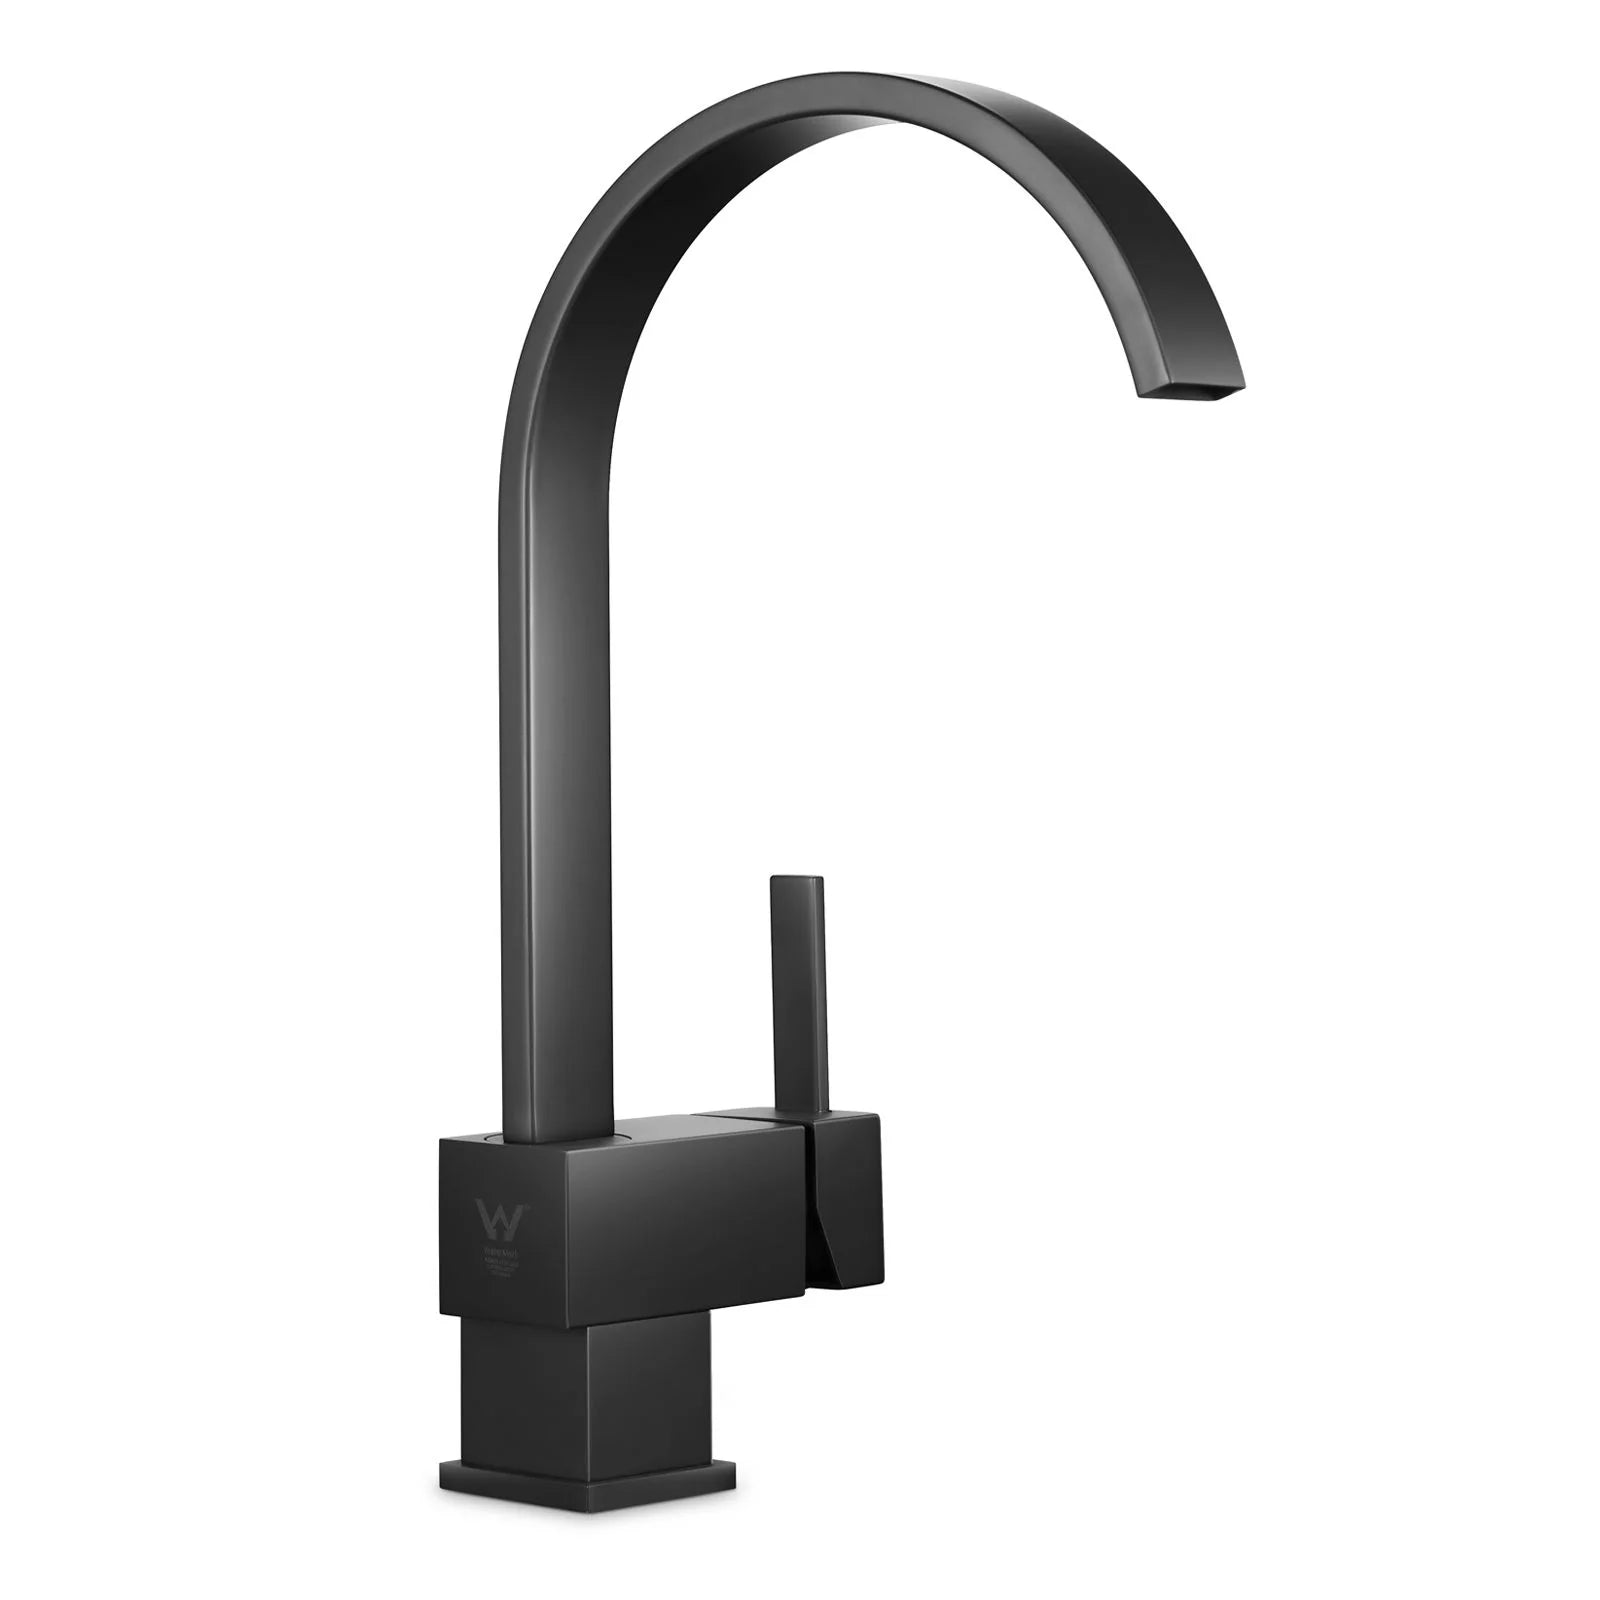 Gooseneck kitchen sink mixer tap: Sleek design for efficient water flow-OX1015.KM